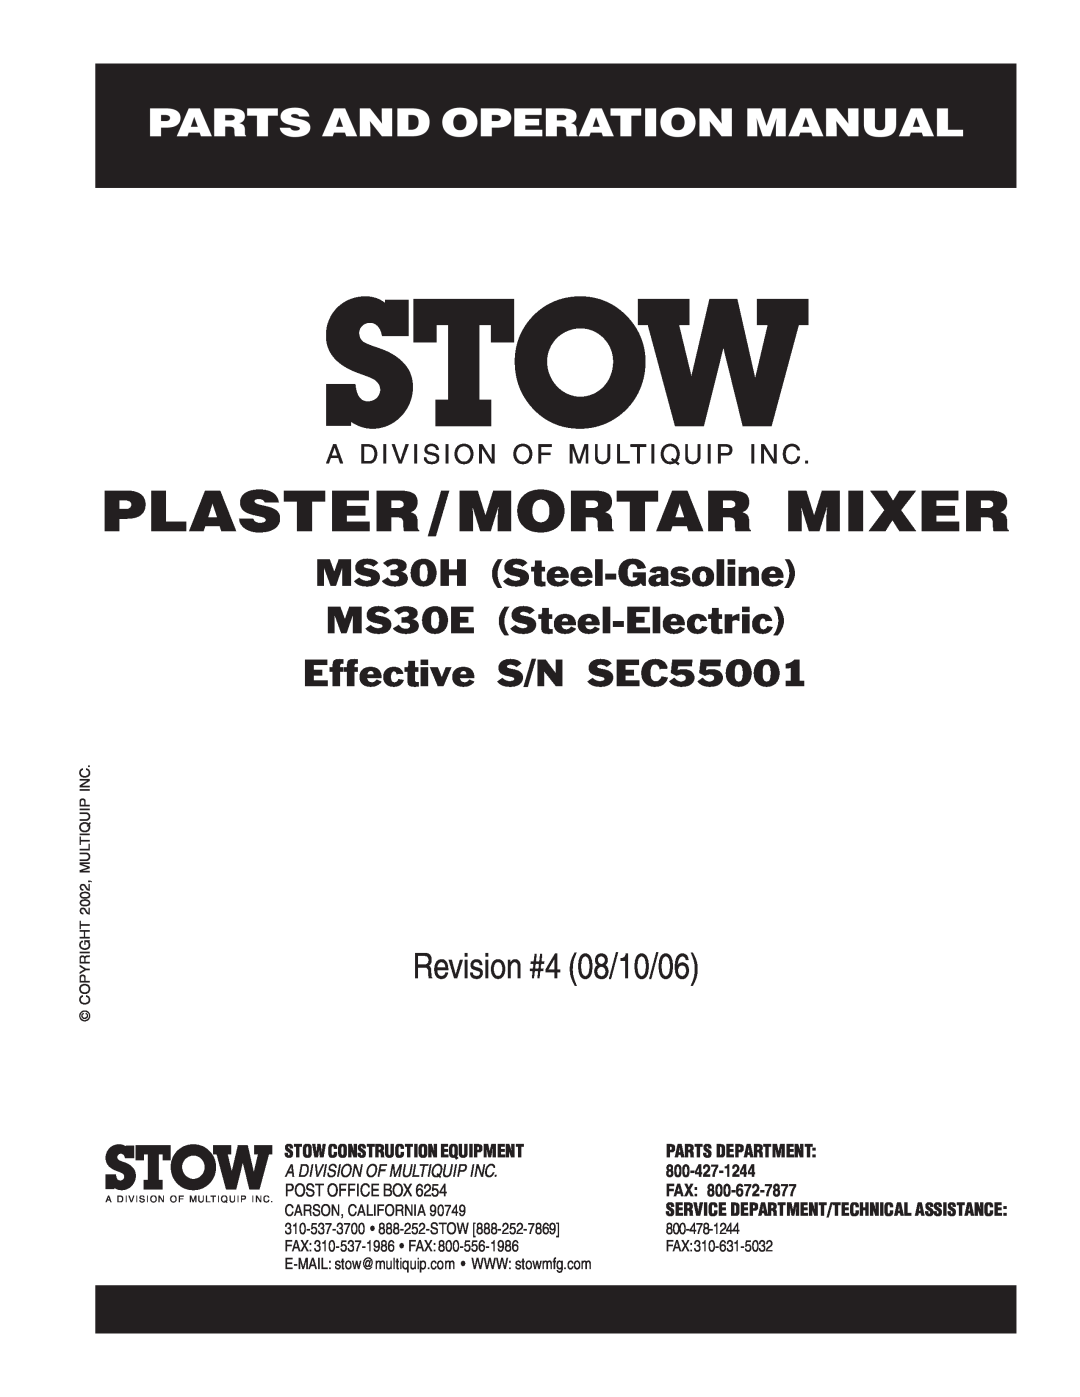 Sonic Alert manual Plaster/Mortar Mixer, MS30H Steel-Gasoline MS30E Steel-Electric Effective S/N SEC55001 